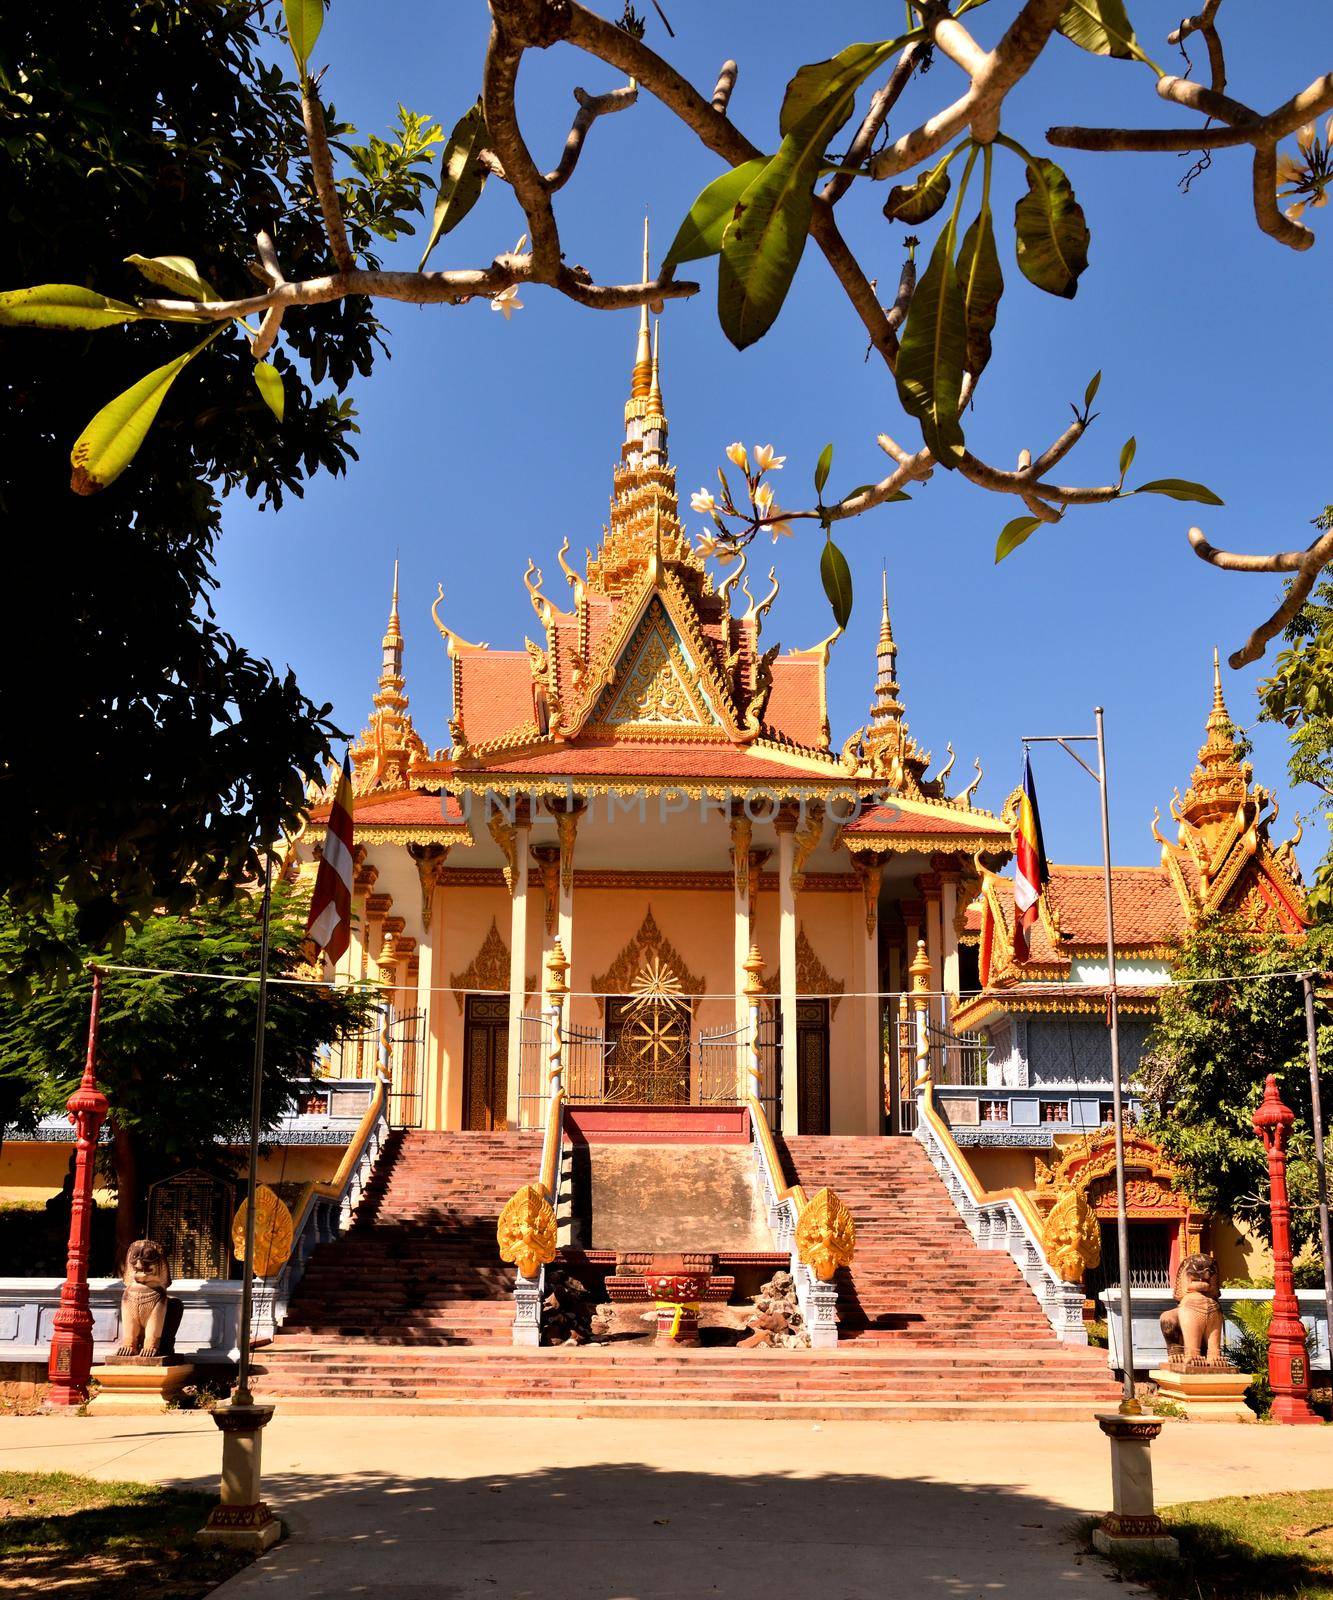 View of the modern Ek Phnom temple, Battambang by silentstock639